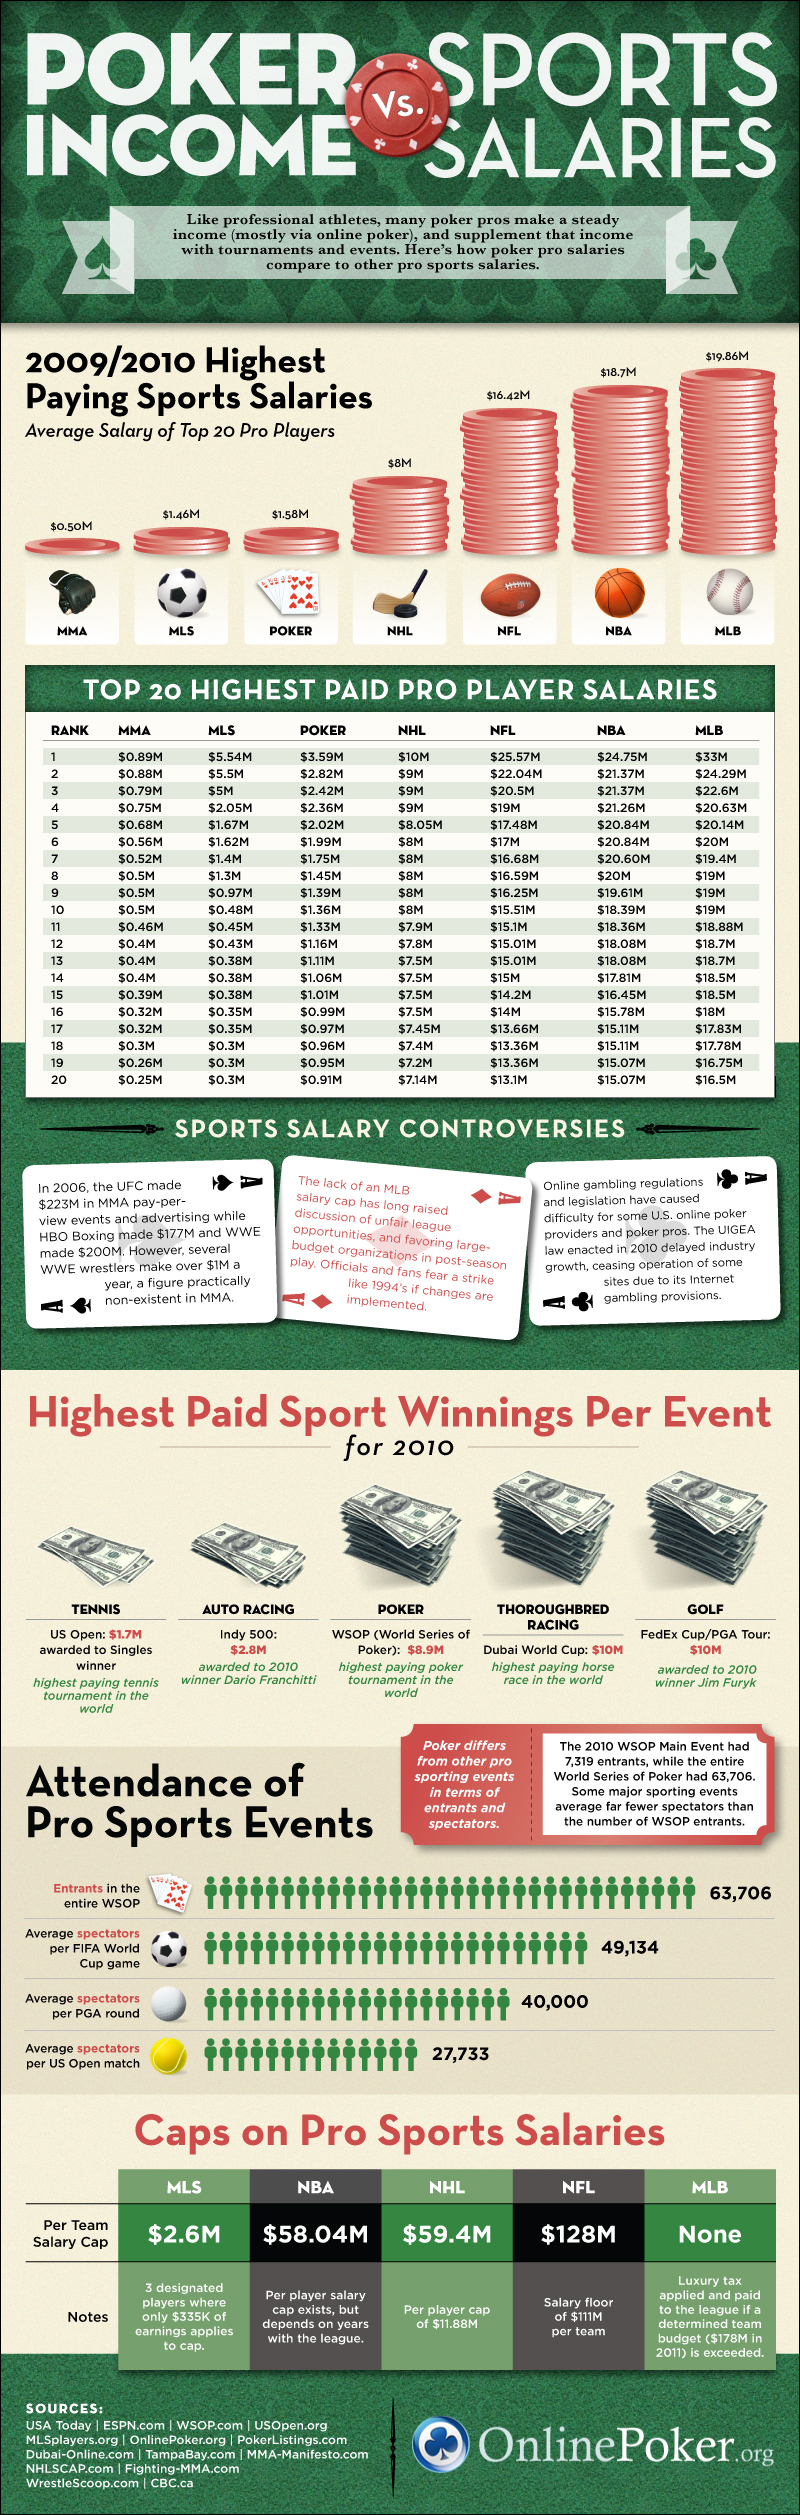 Poker Income vs Sports Salaries Infographic